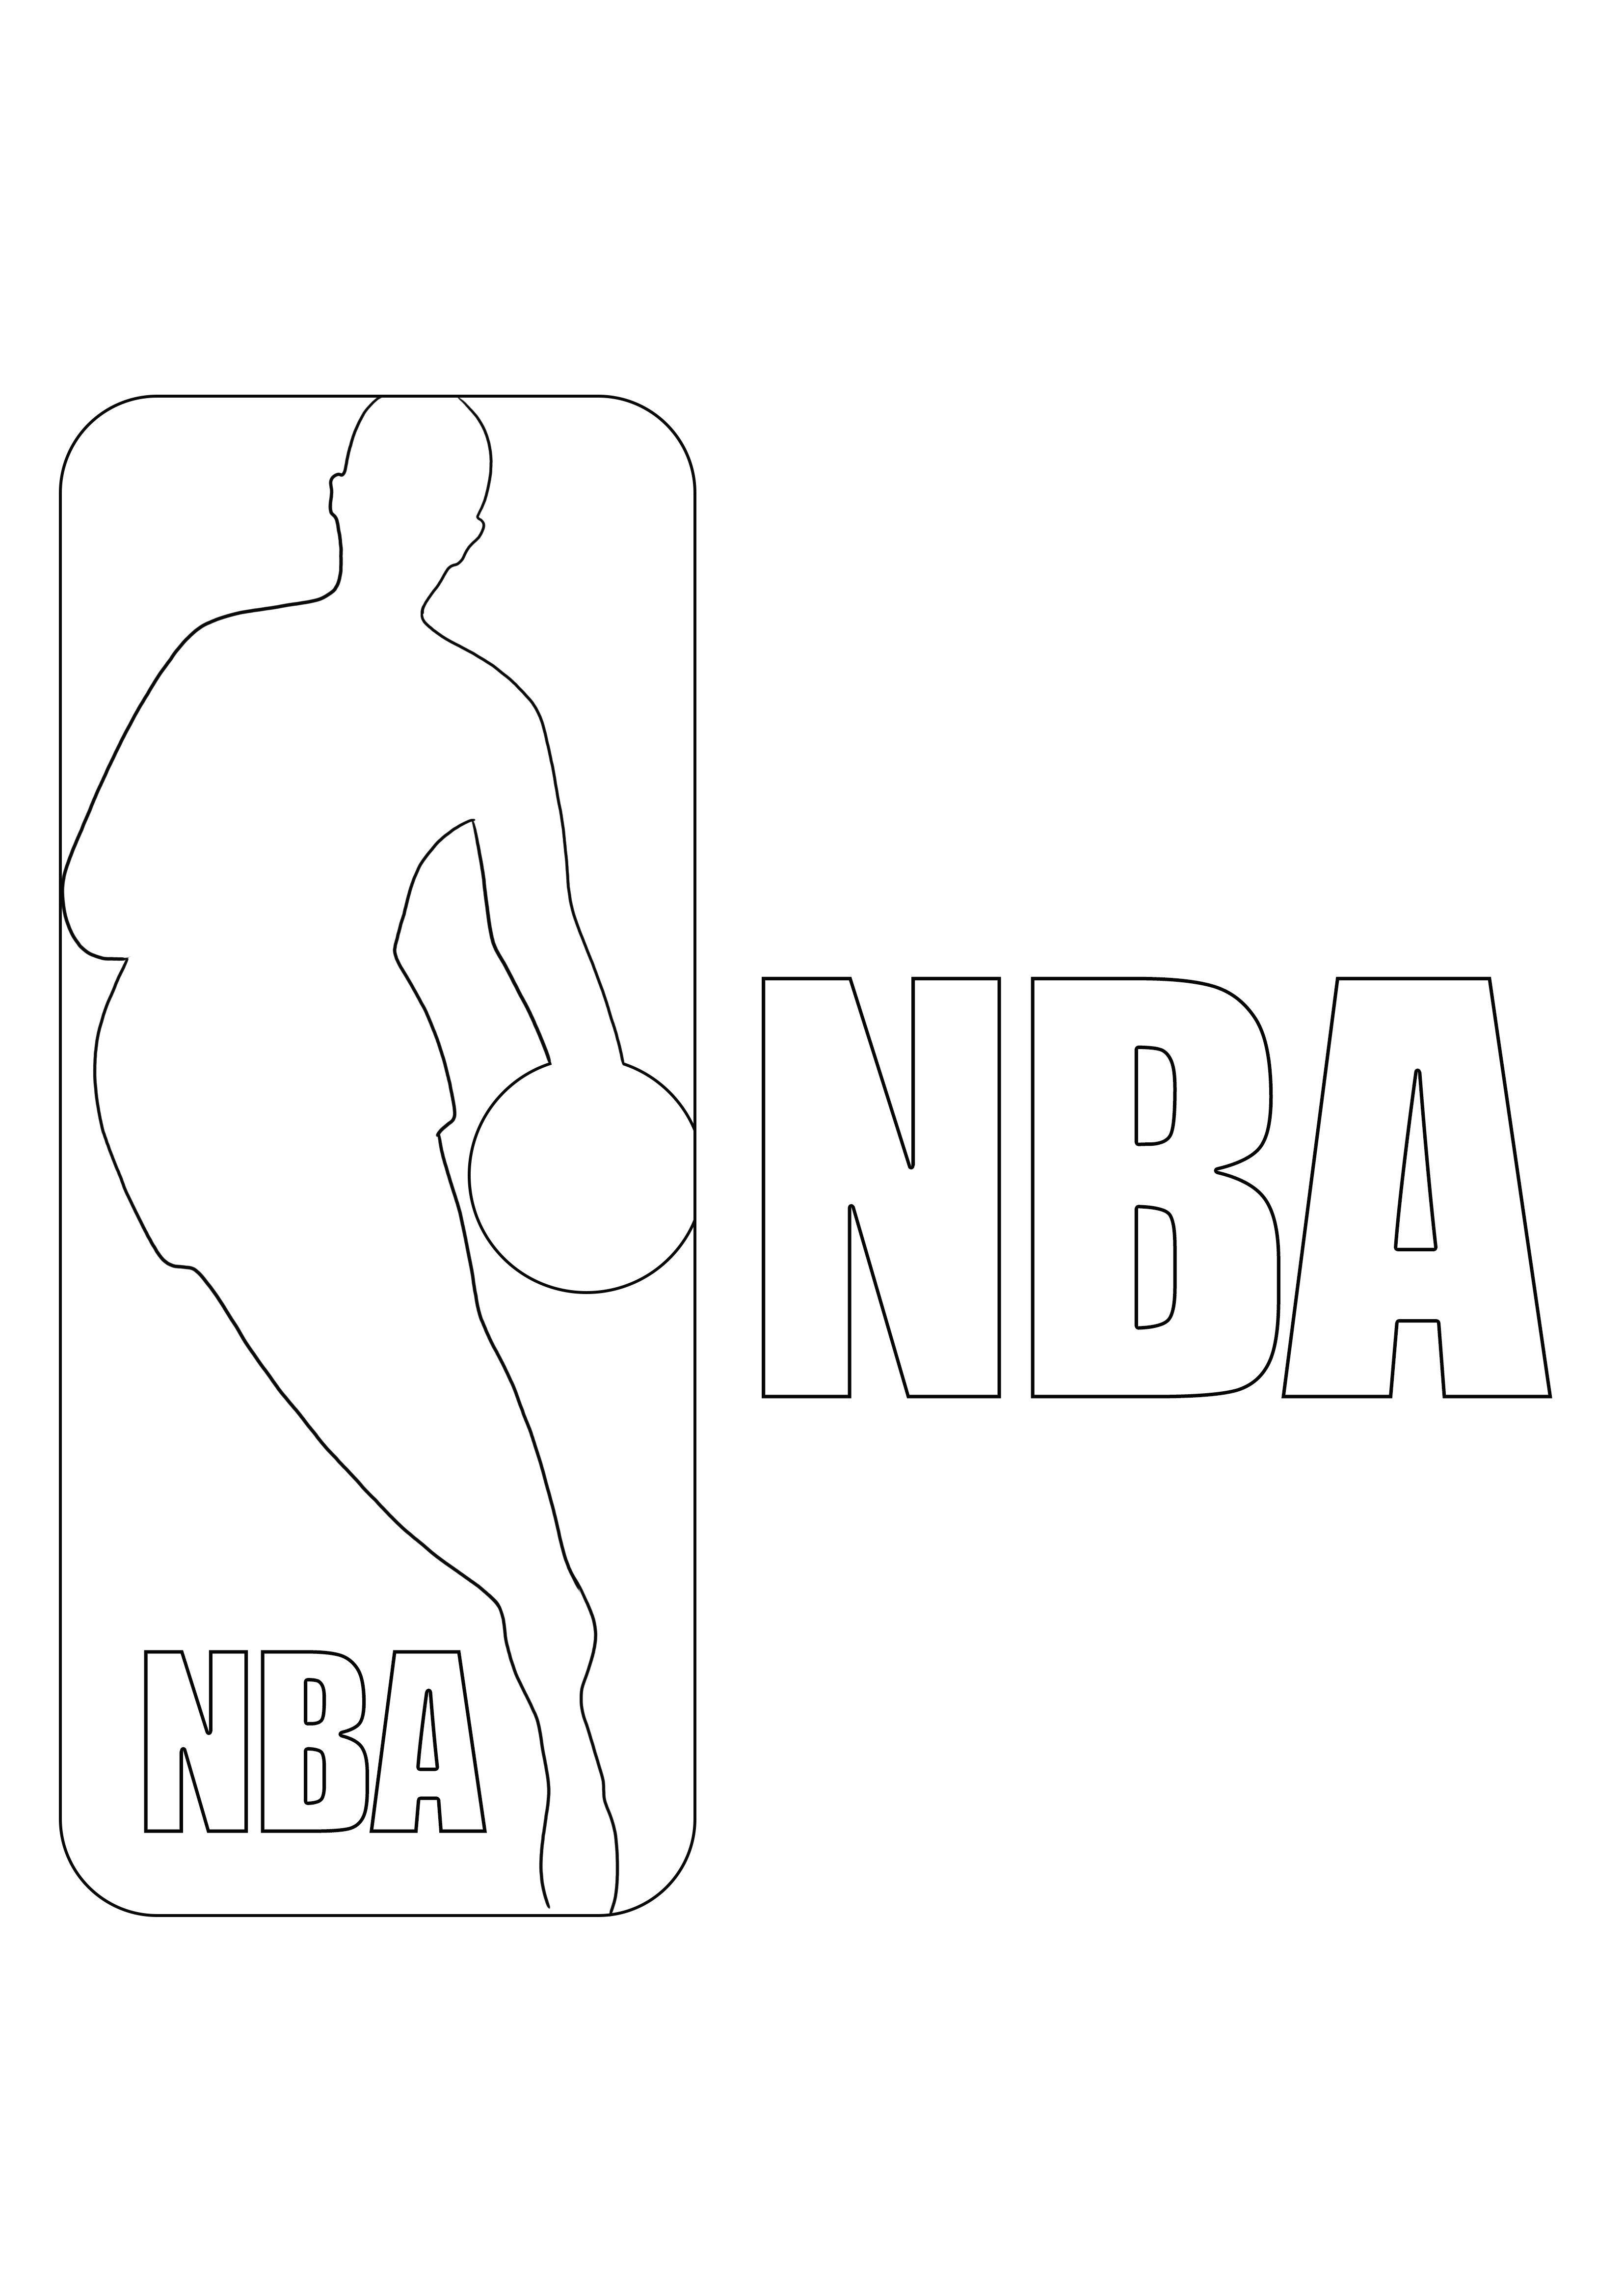 NBA Logo free printable to color for kids who love NBA and sports